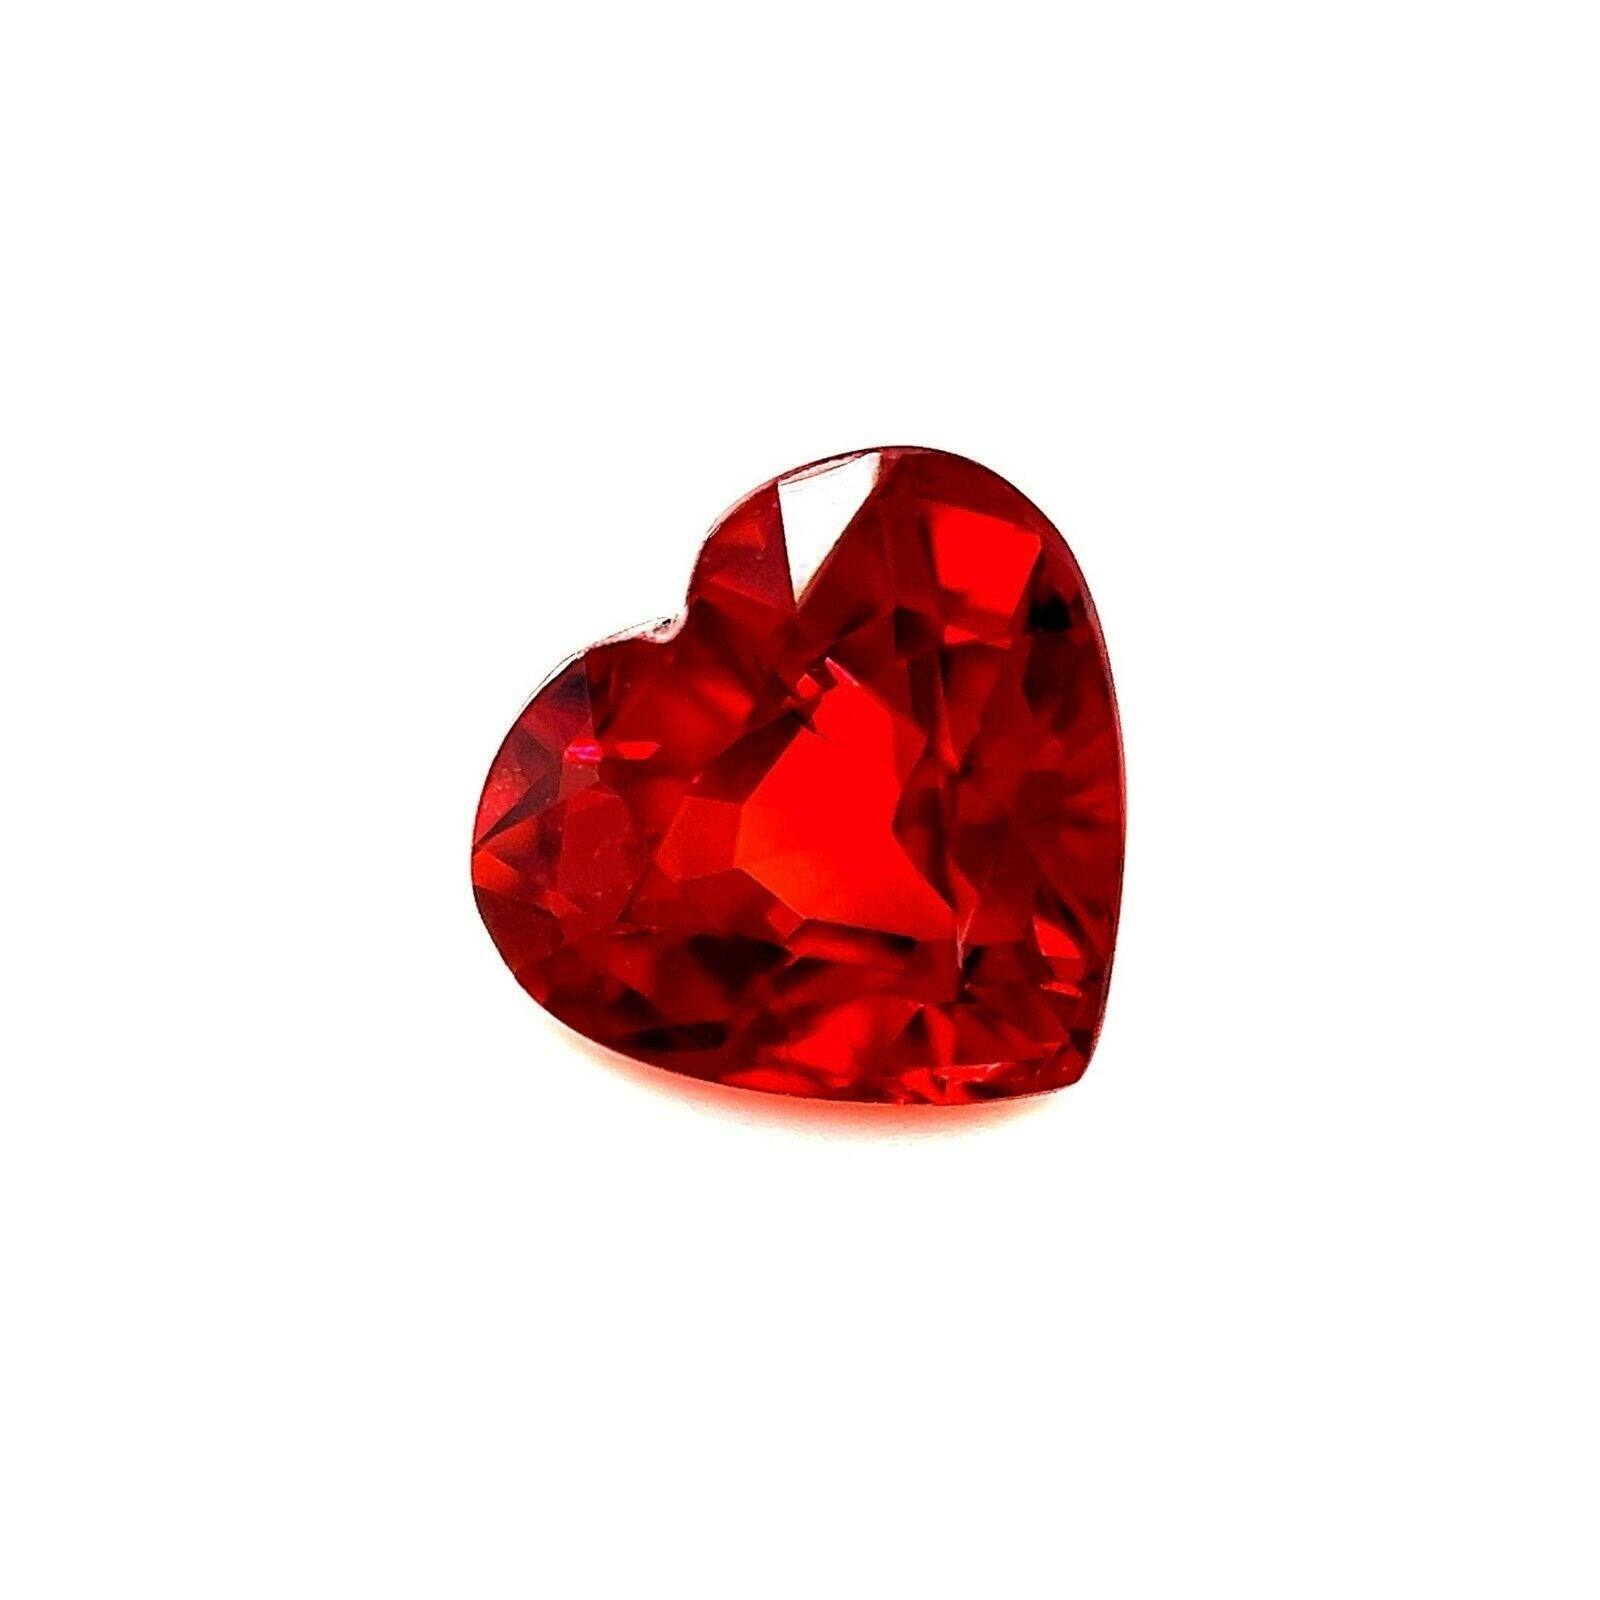 Fine1.13ct Vivid Orange Red Spessartine Garnet Heart Cut Loose Gem 6.2x5.7mm